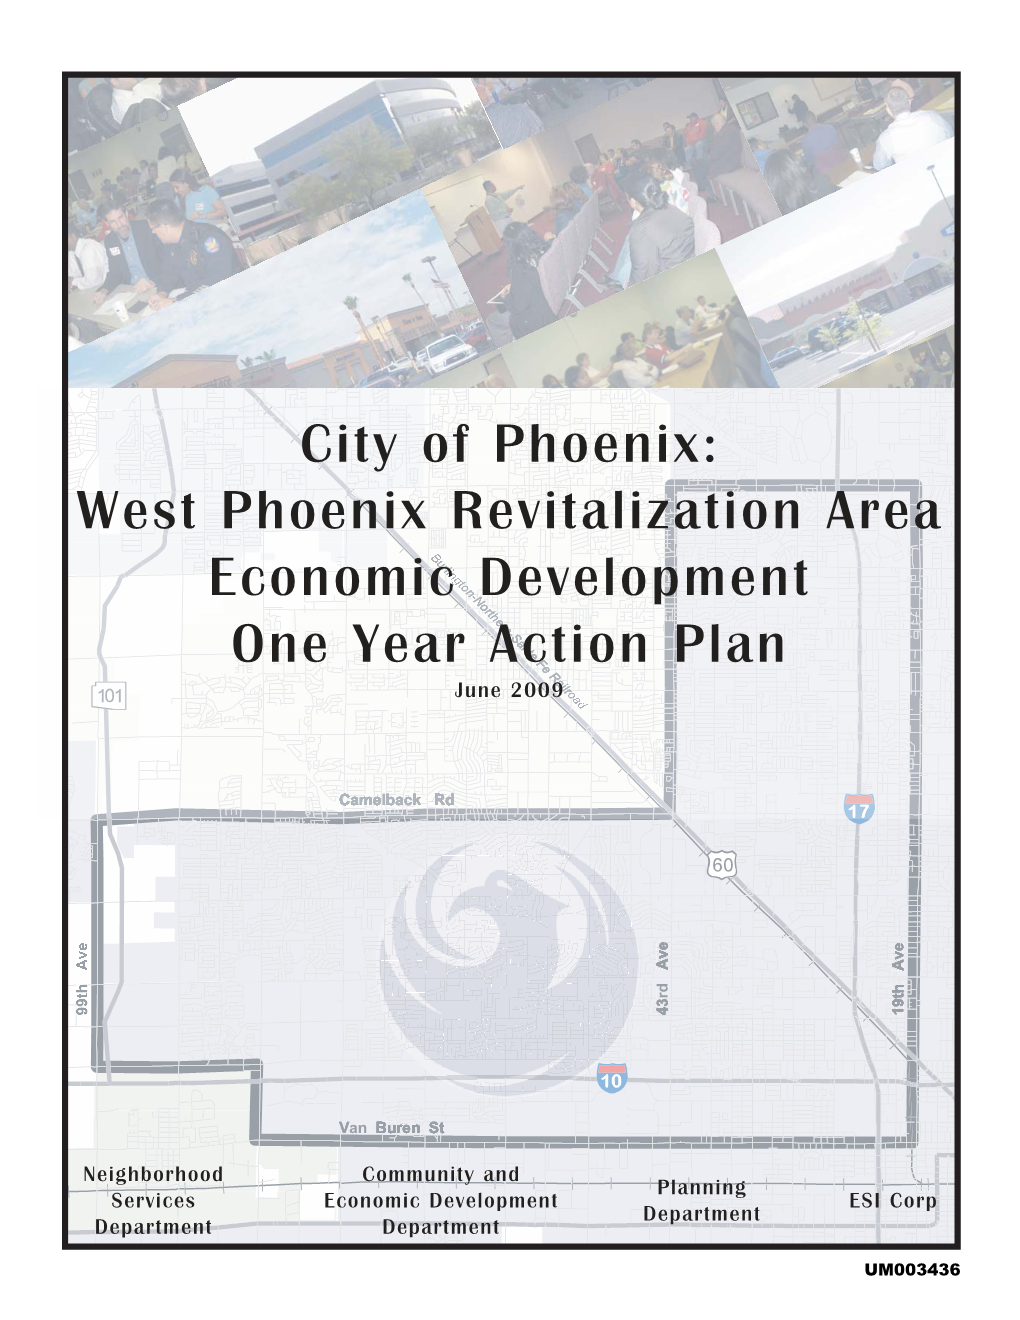 West Phoenix Revitalization Area Economic Development One Year